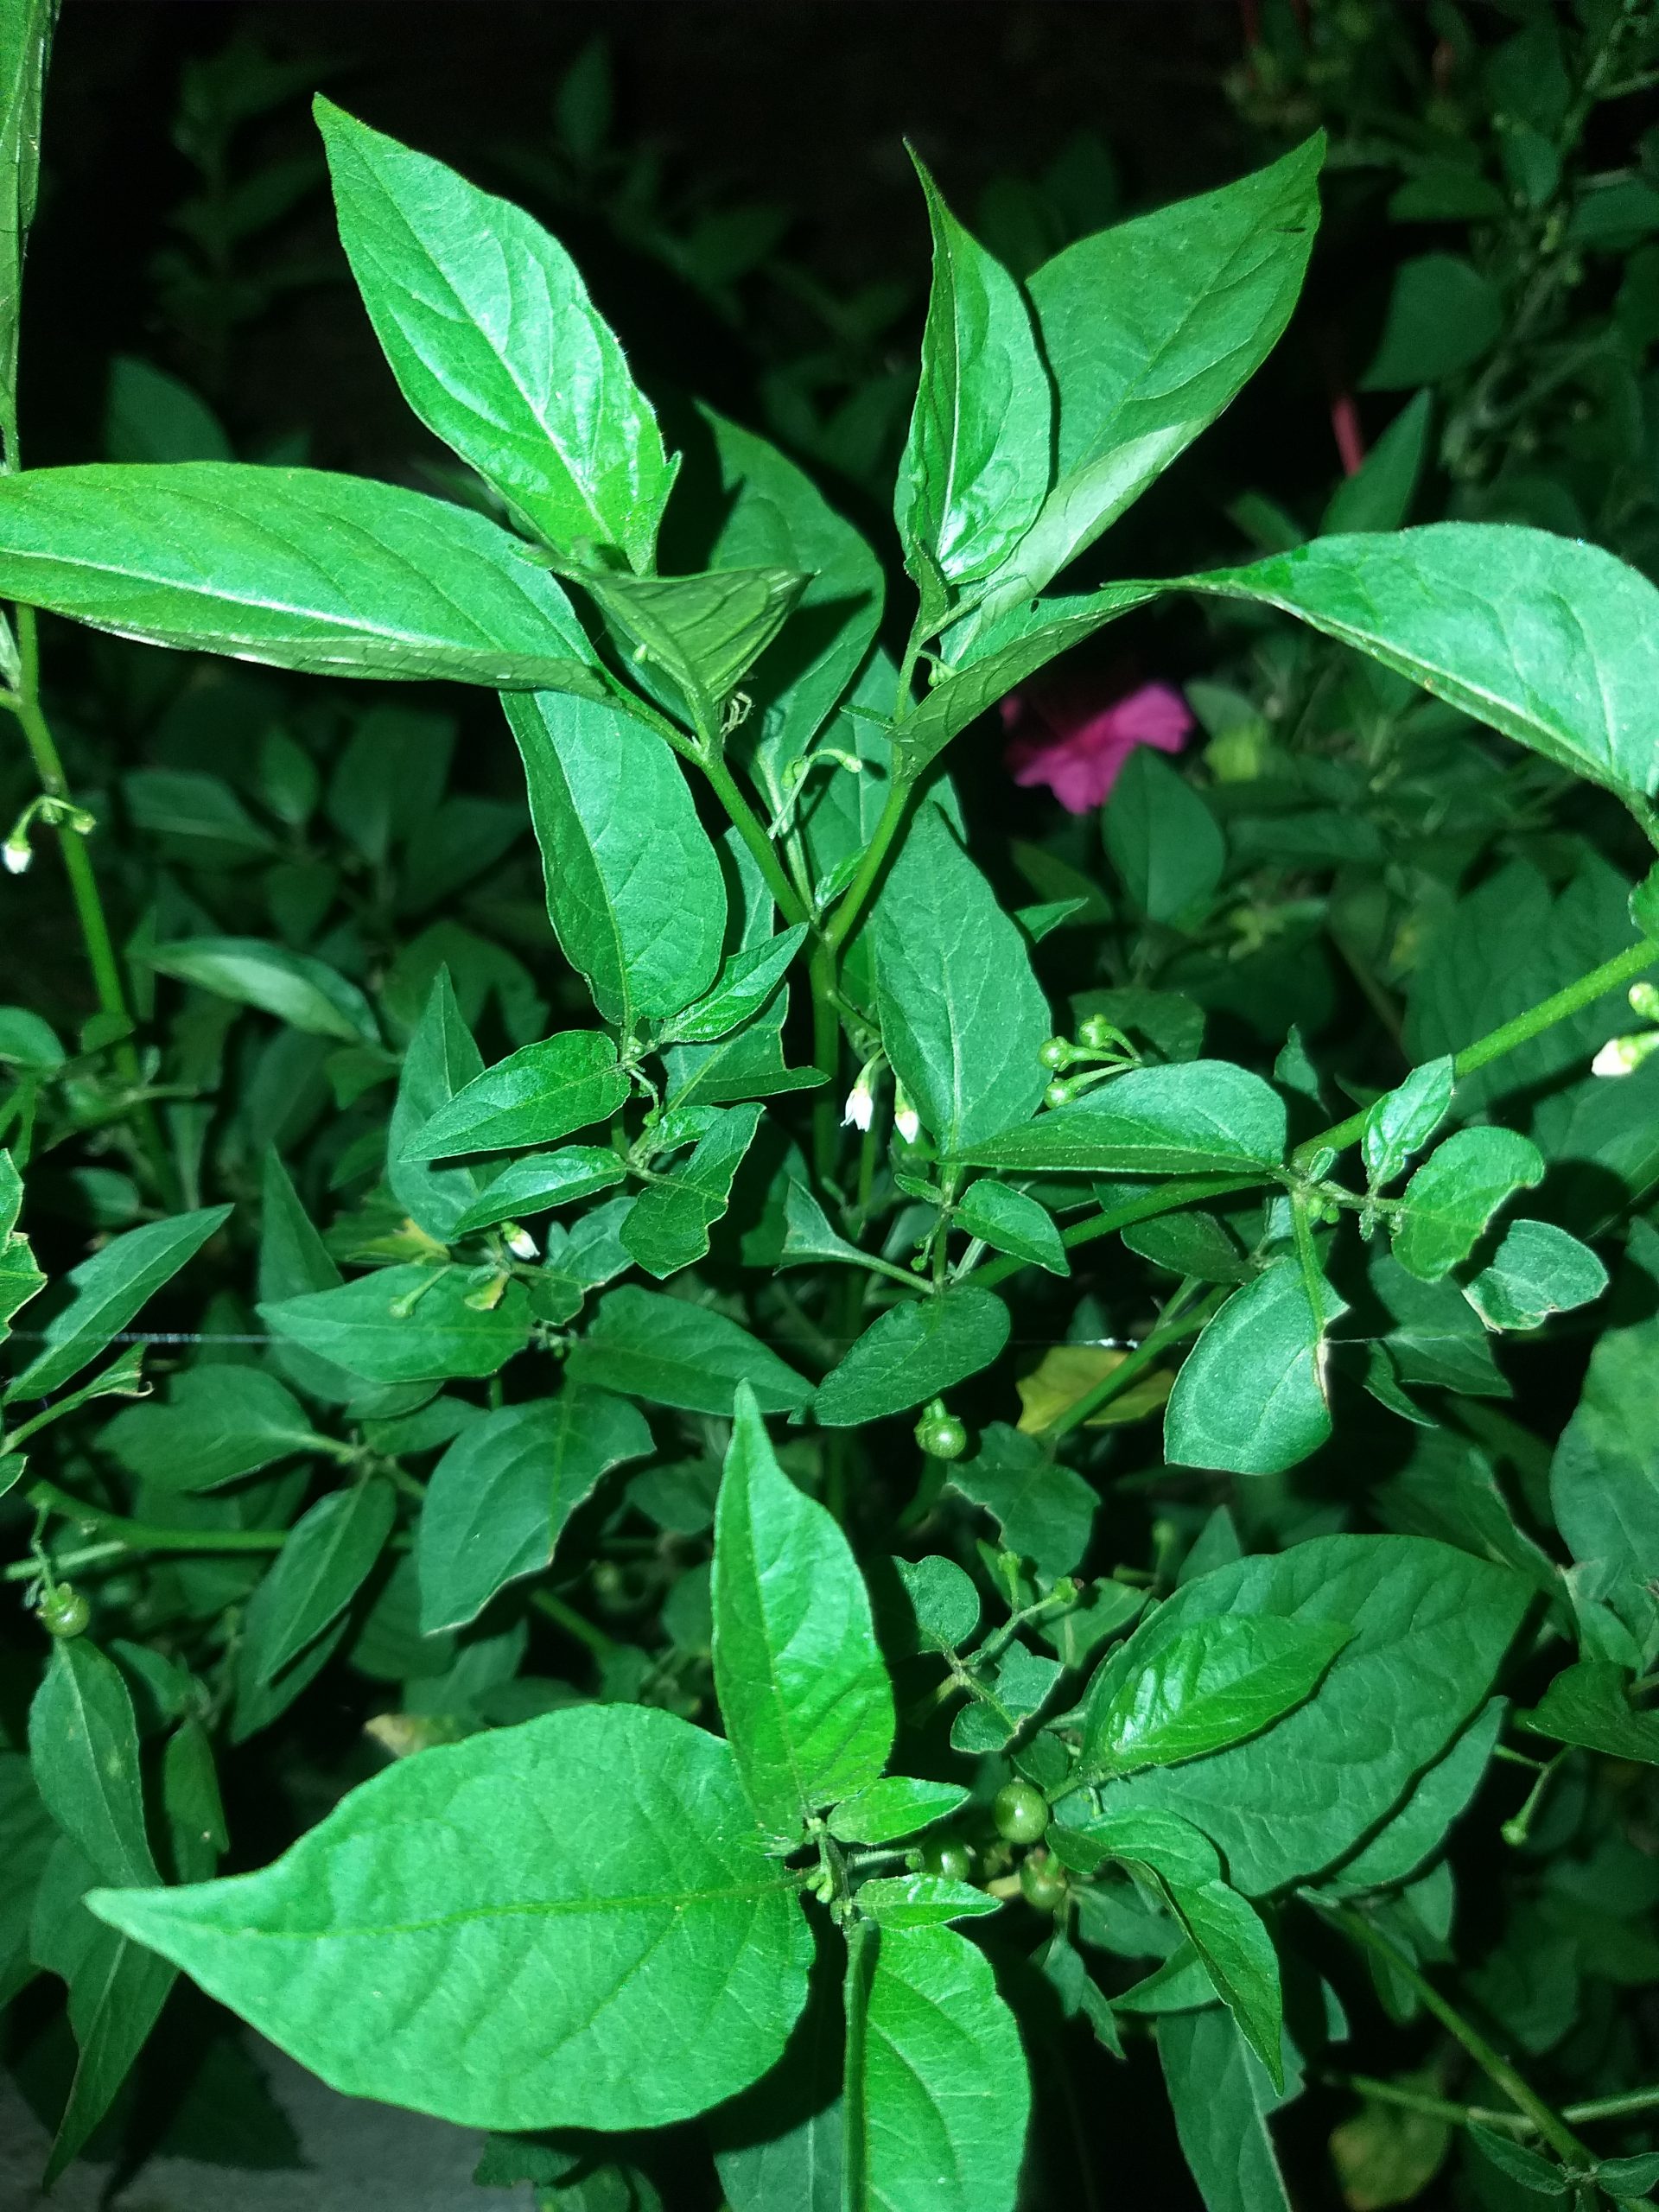 Capturing Plant at Night